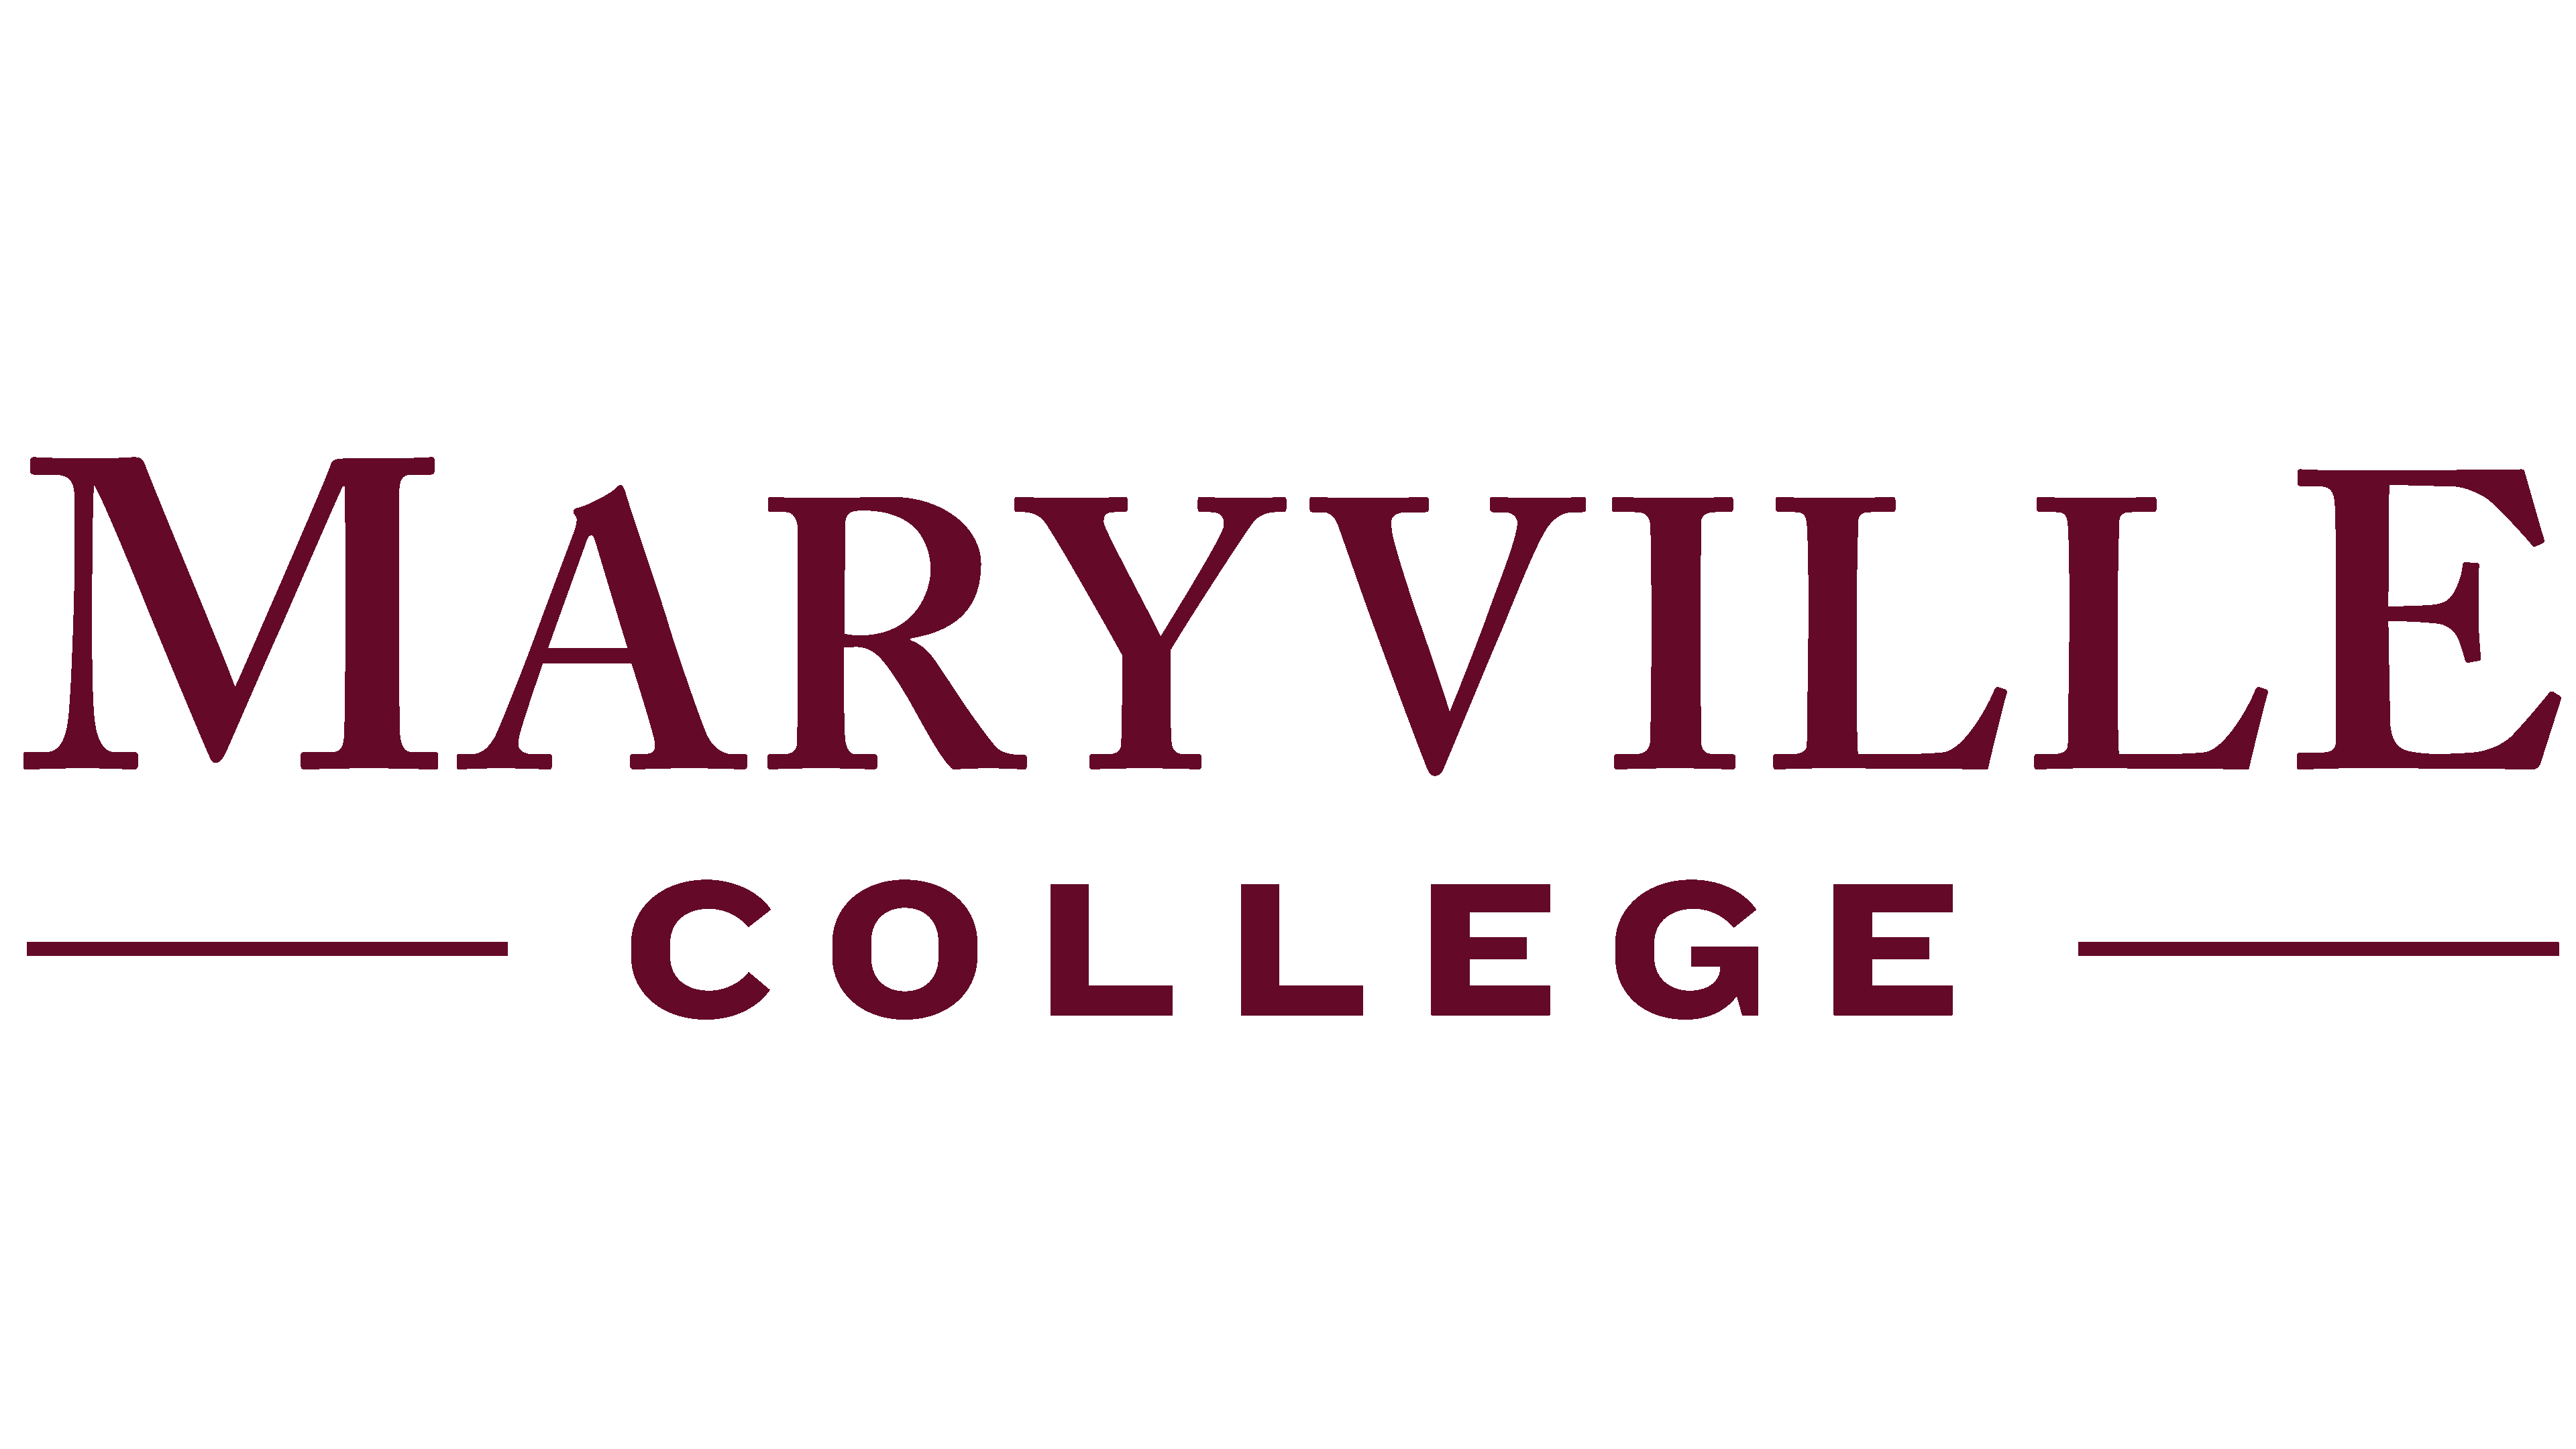 Maryville College unveils new identity